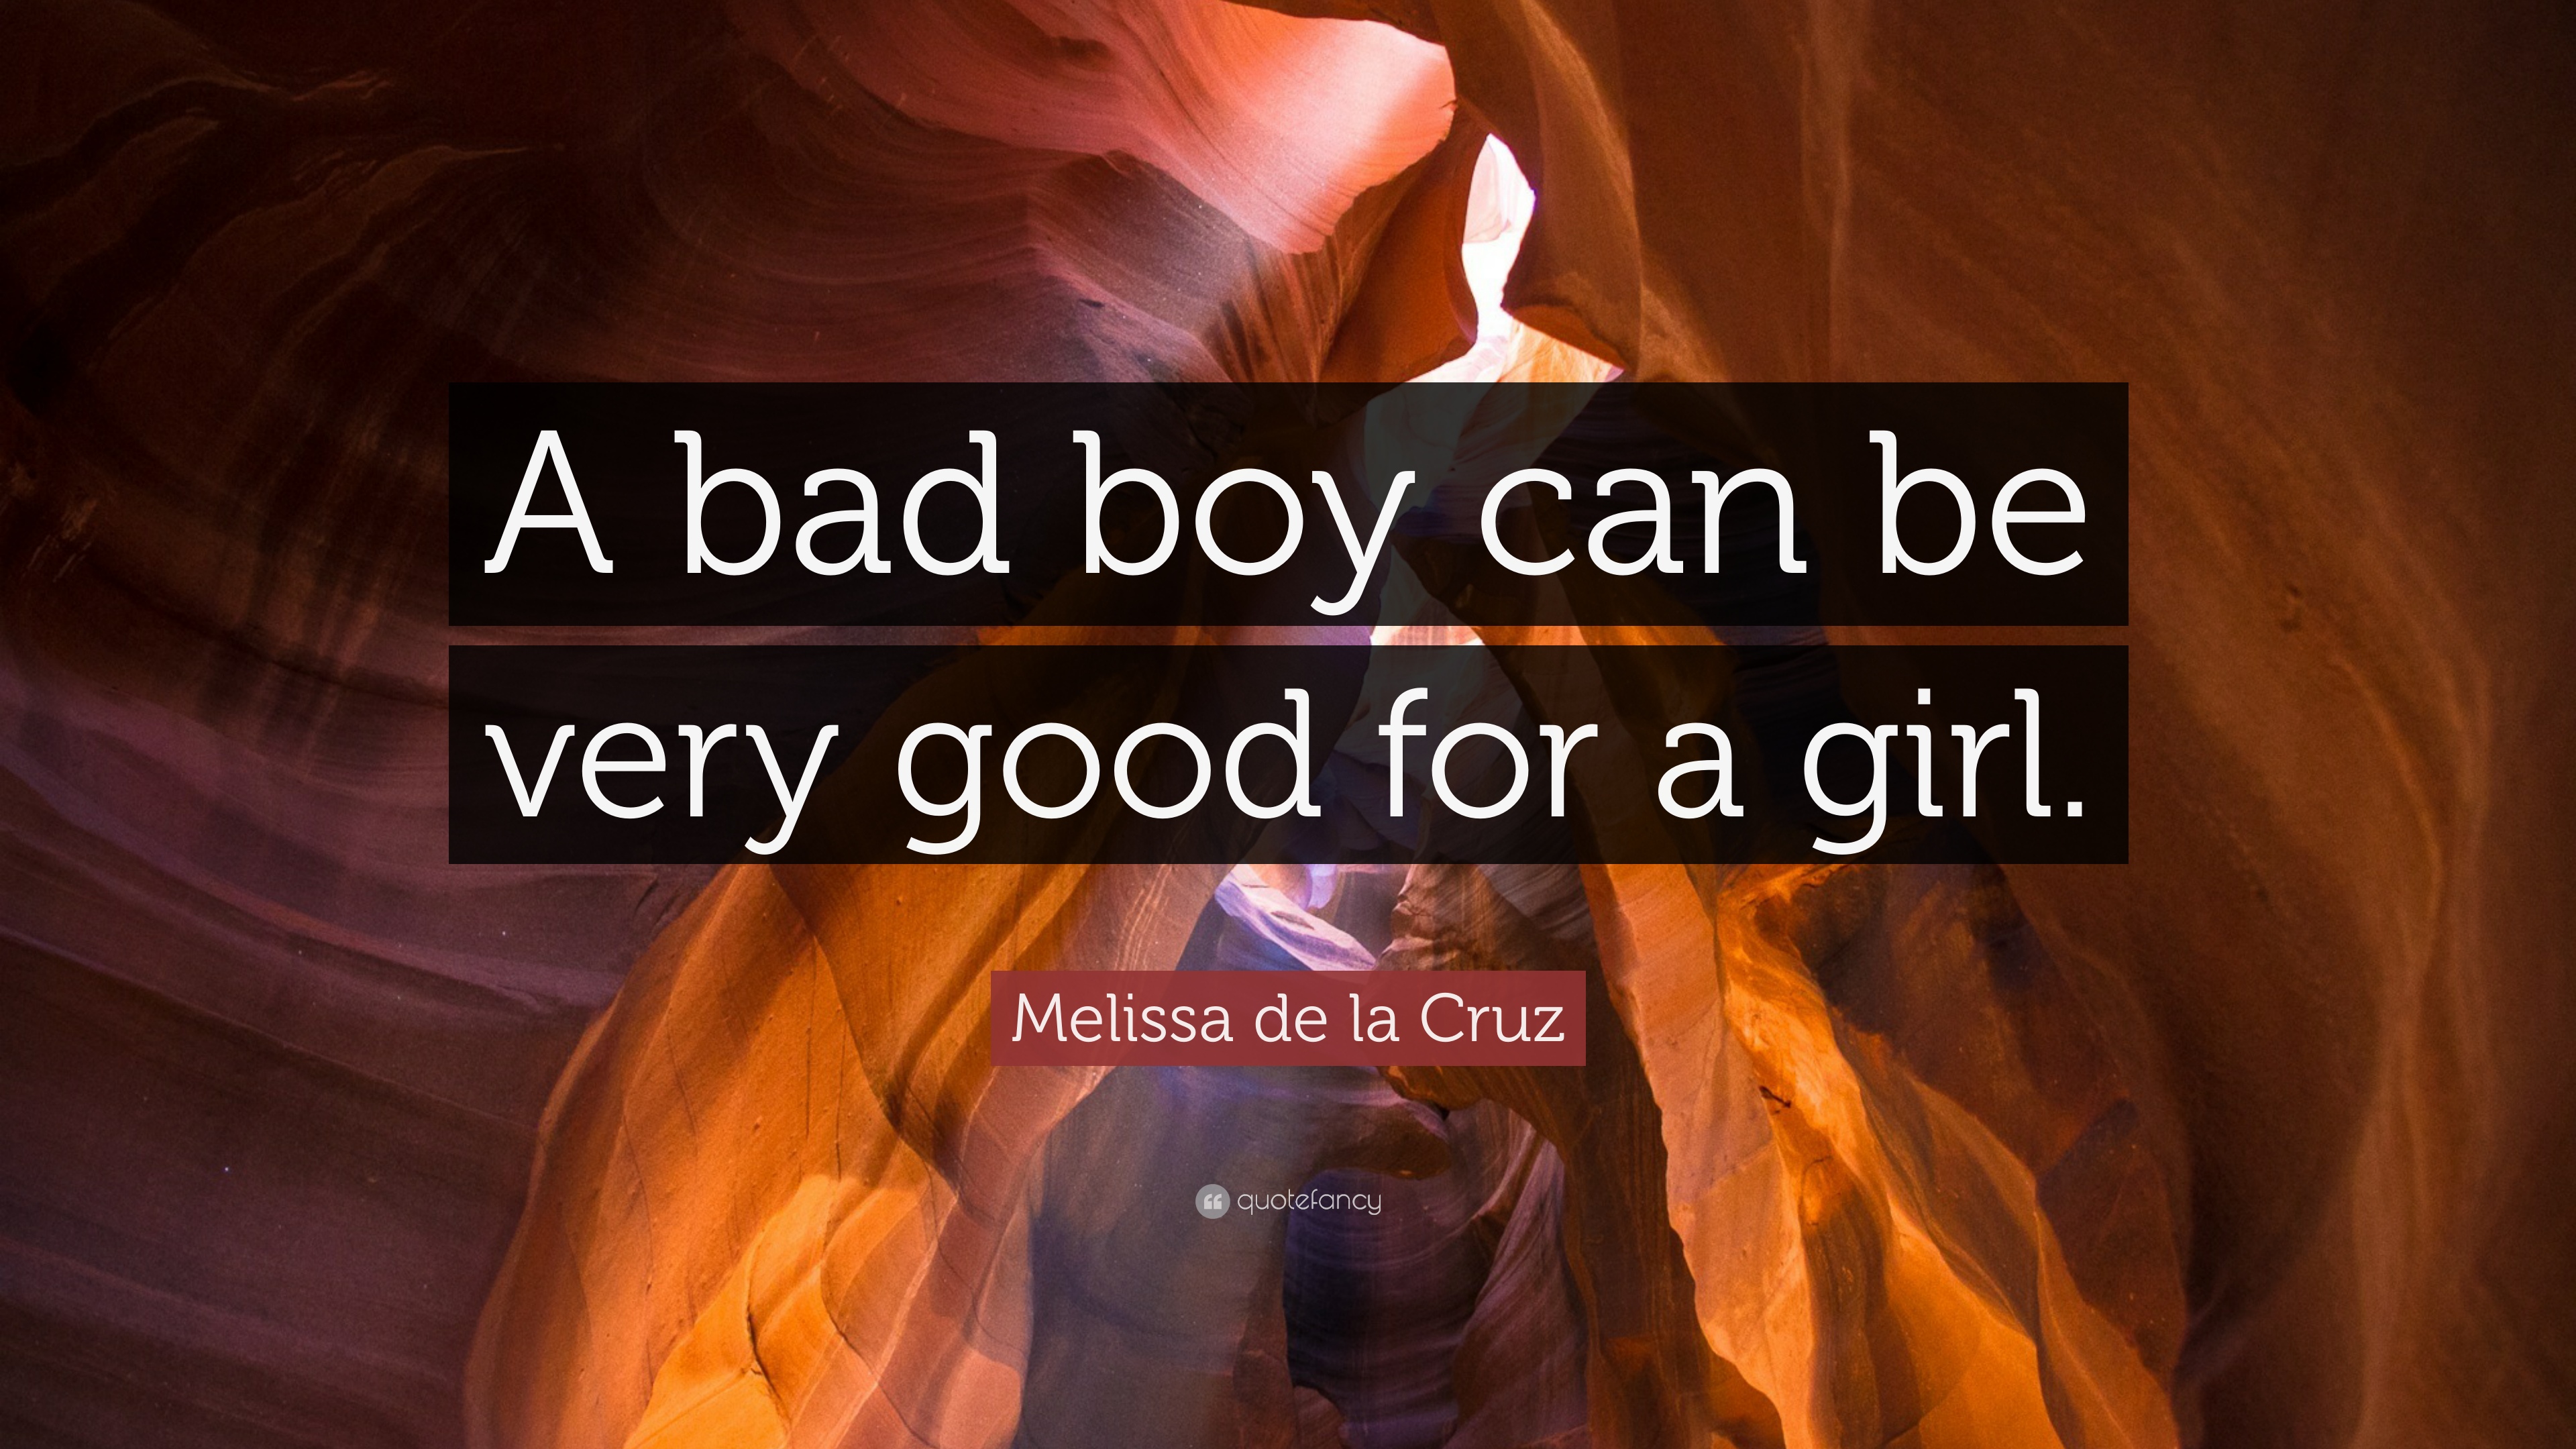 Melissa de la Cruz Quote: “A bad boy can be very good for a girl